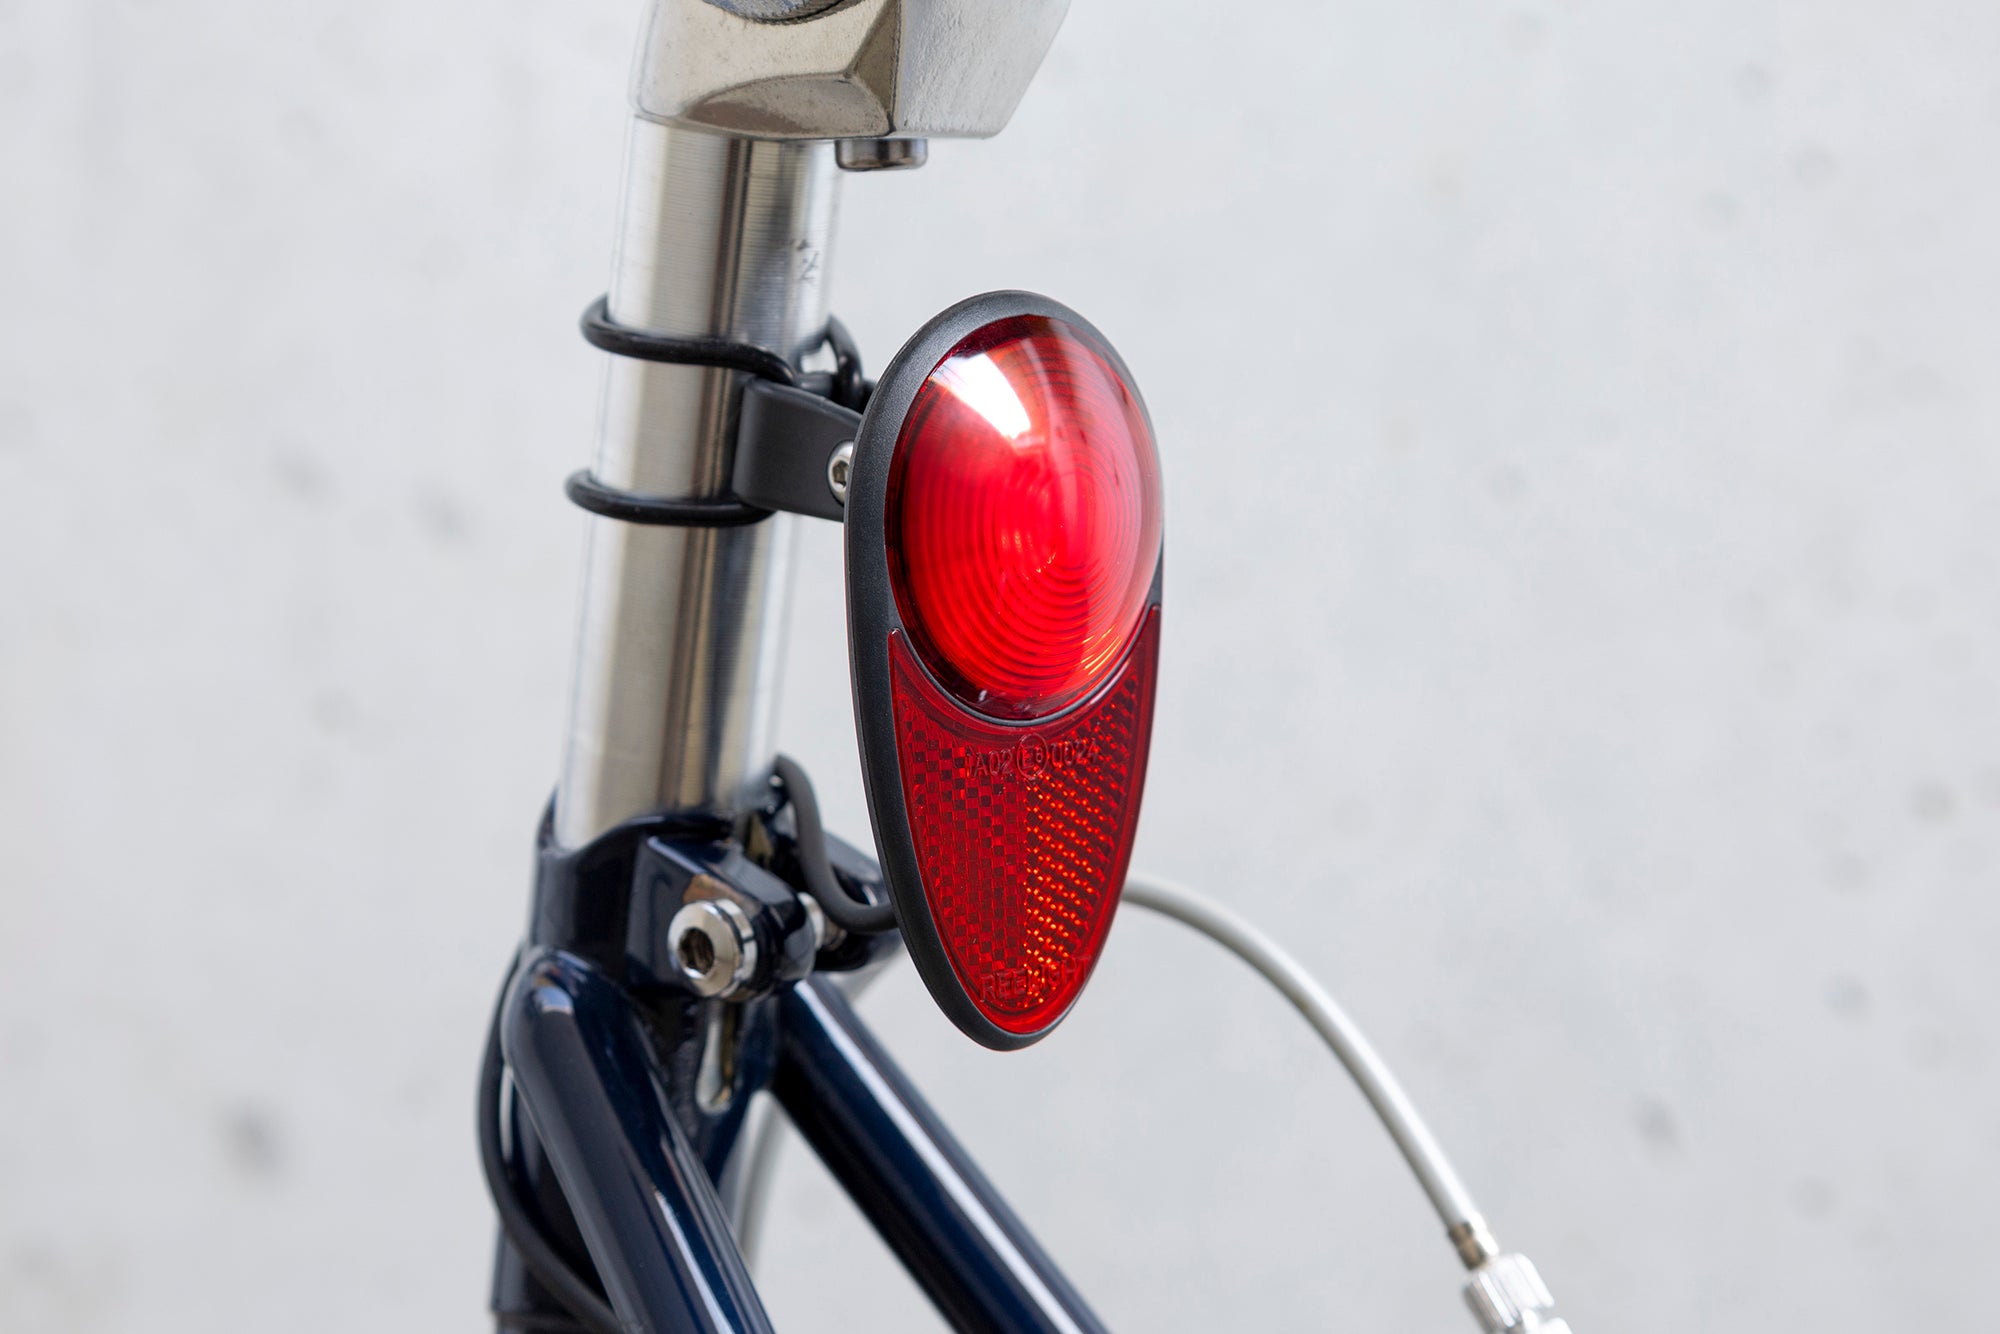 NOVA Modular Battery-Free Bike Light System